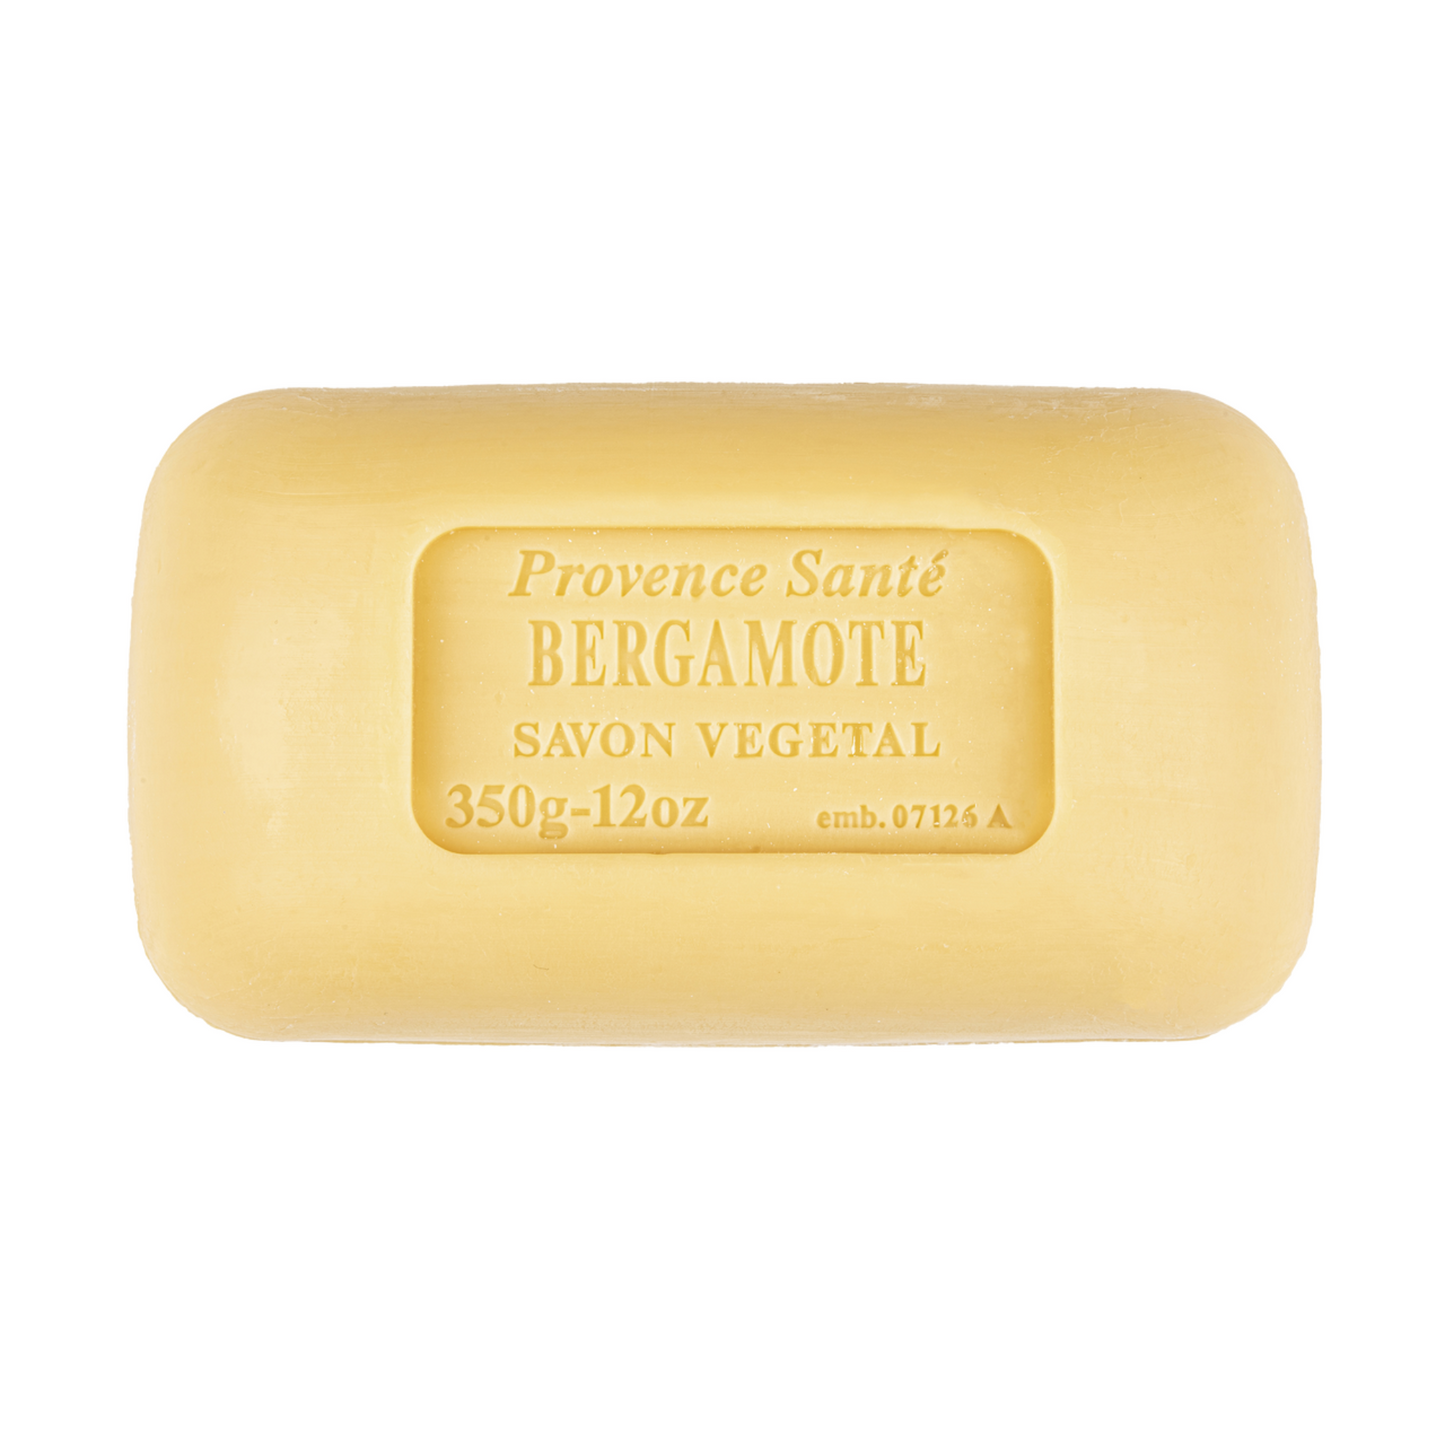 Primary Image of Provence Sante Bergamot Big Bar Soap (12 oz) 